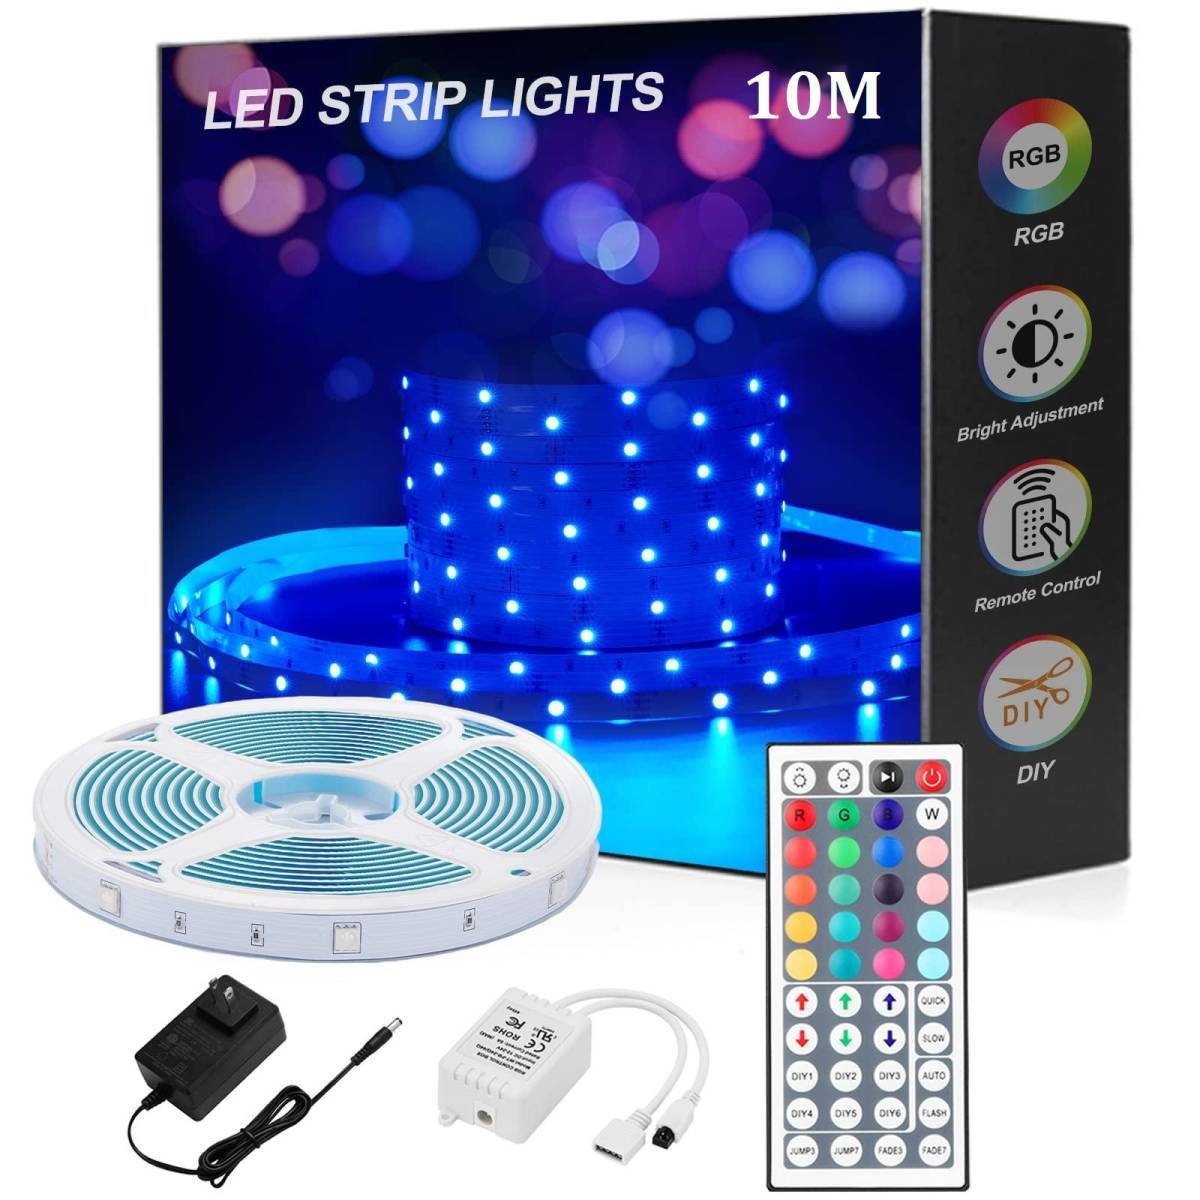 【WQHV】Lightight LEDテープライト 10M RGB 両面テープ 44キーリモコン DC12V 高輝度 間接照明 切断可能 SMD 5050 DIY可能